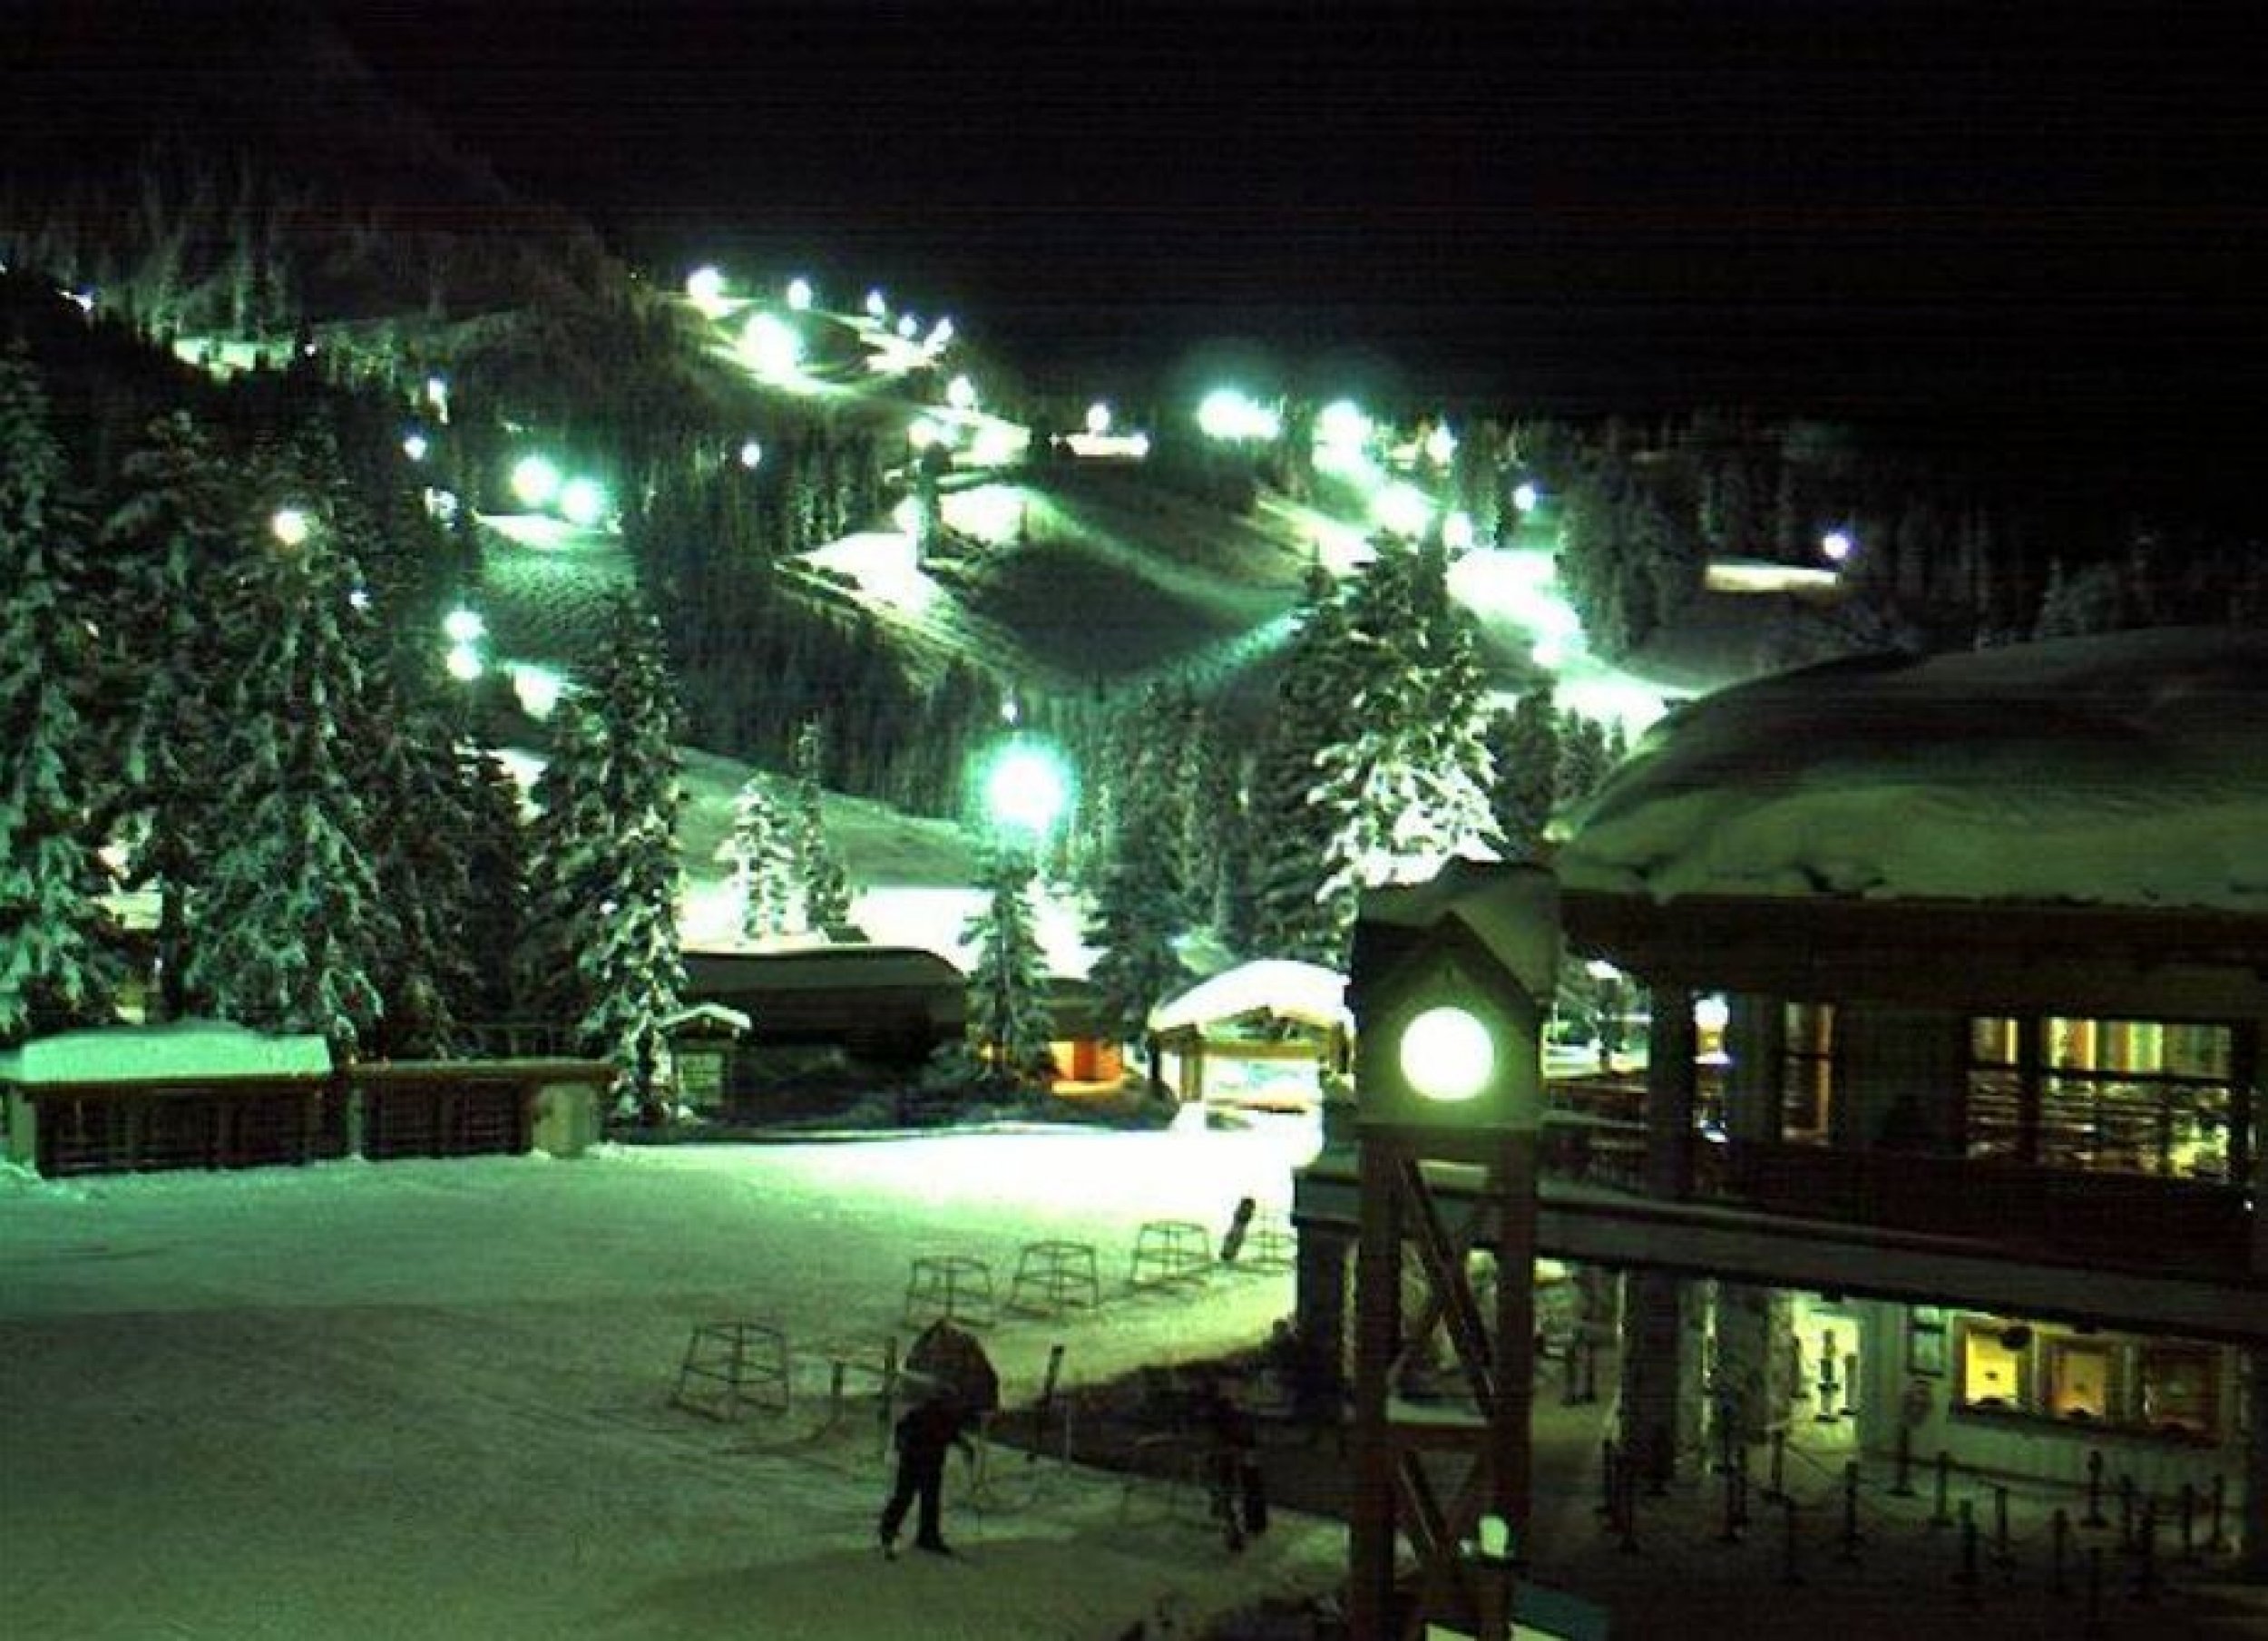 Winter 2012 Snap Avalanche Kills Three Skiers in Washington